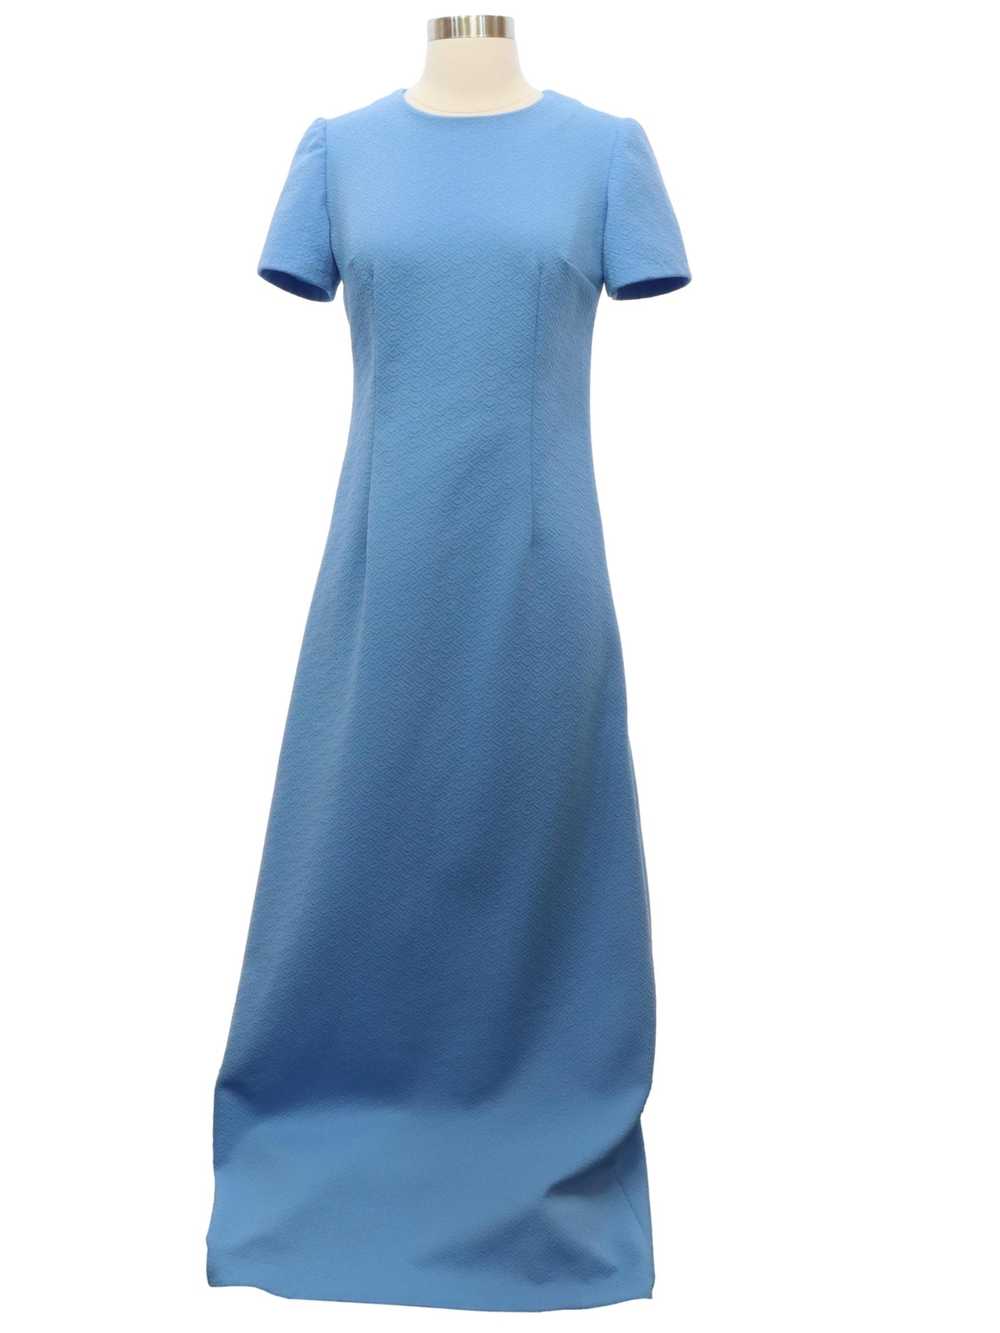 1960's Knit Maxi Dress - image 1